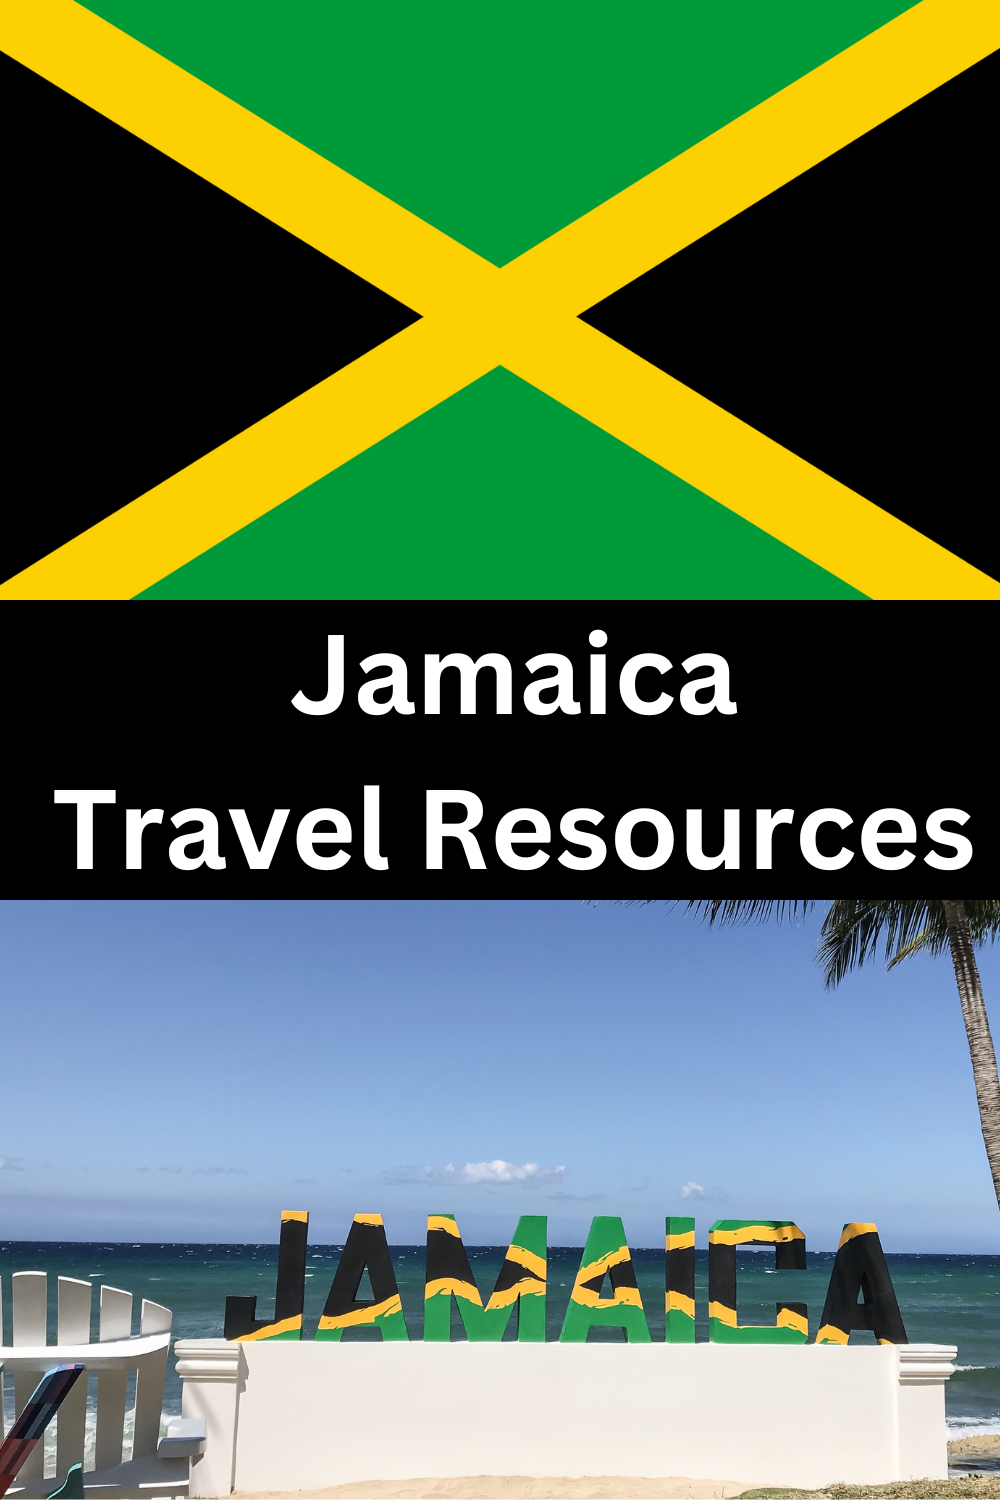 Jamaica Travel Resources